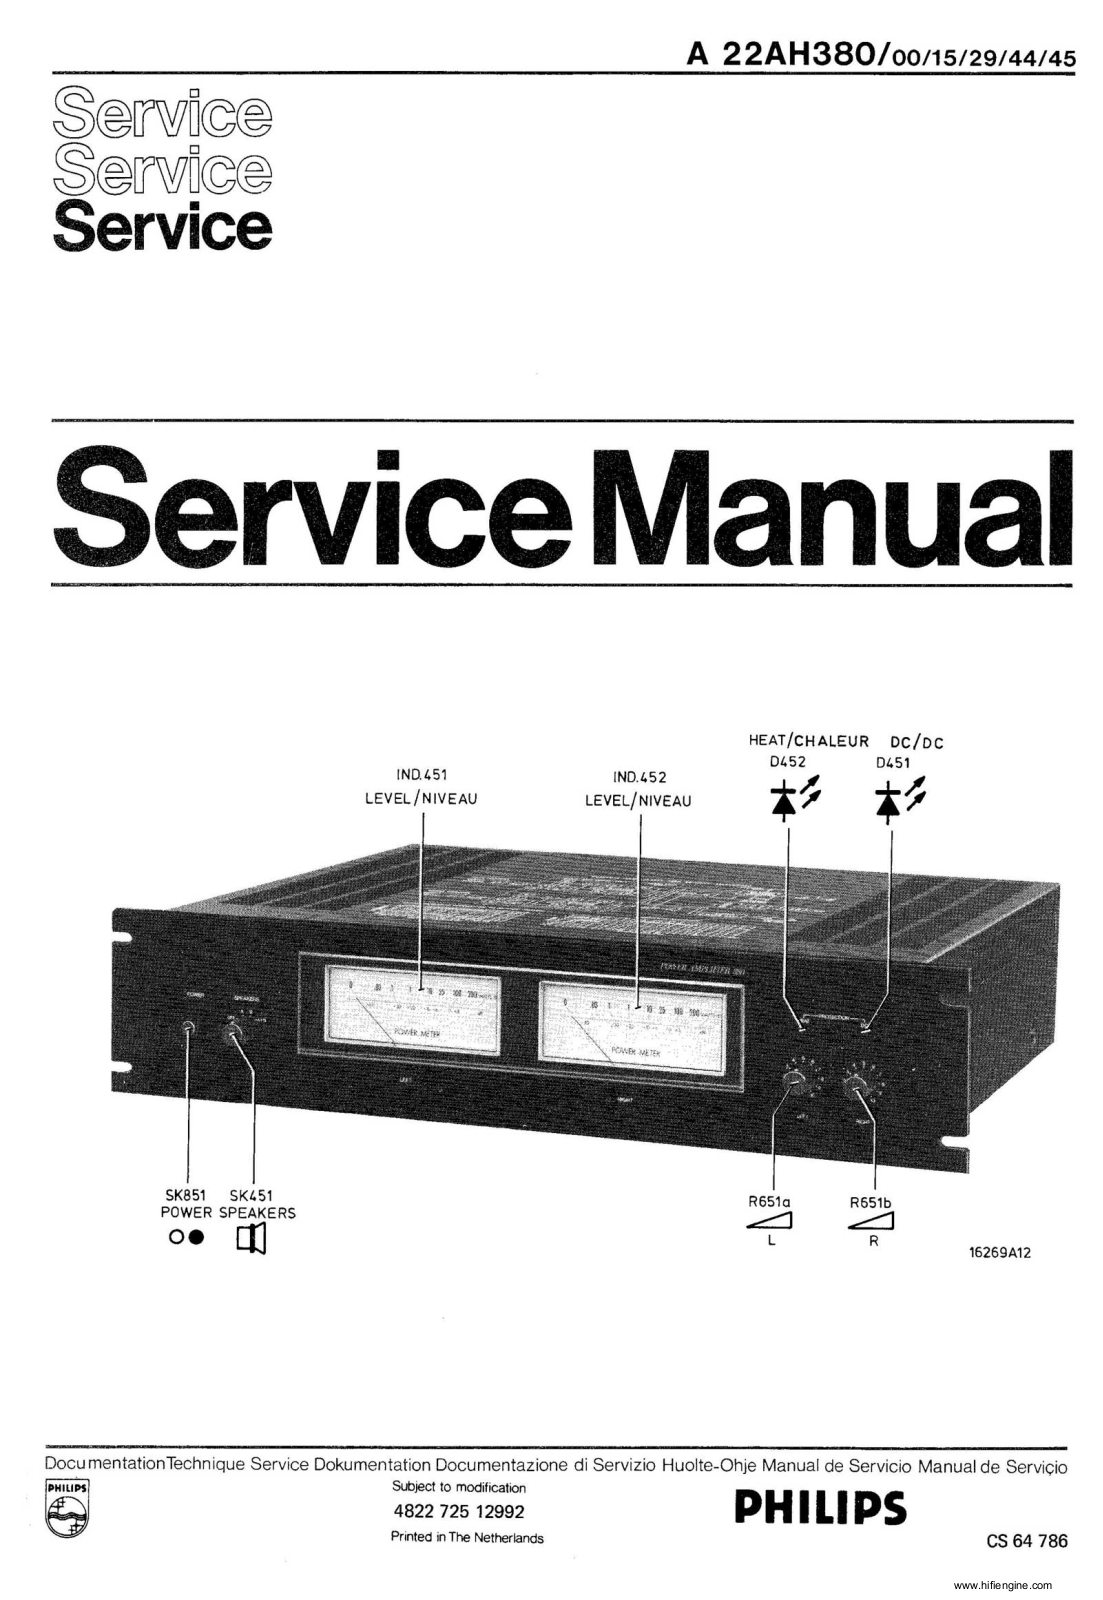 Philips AH-380 Service Manual